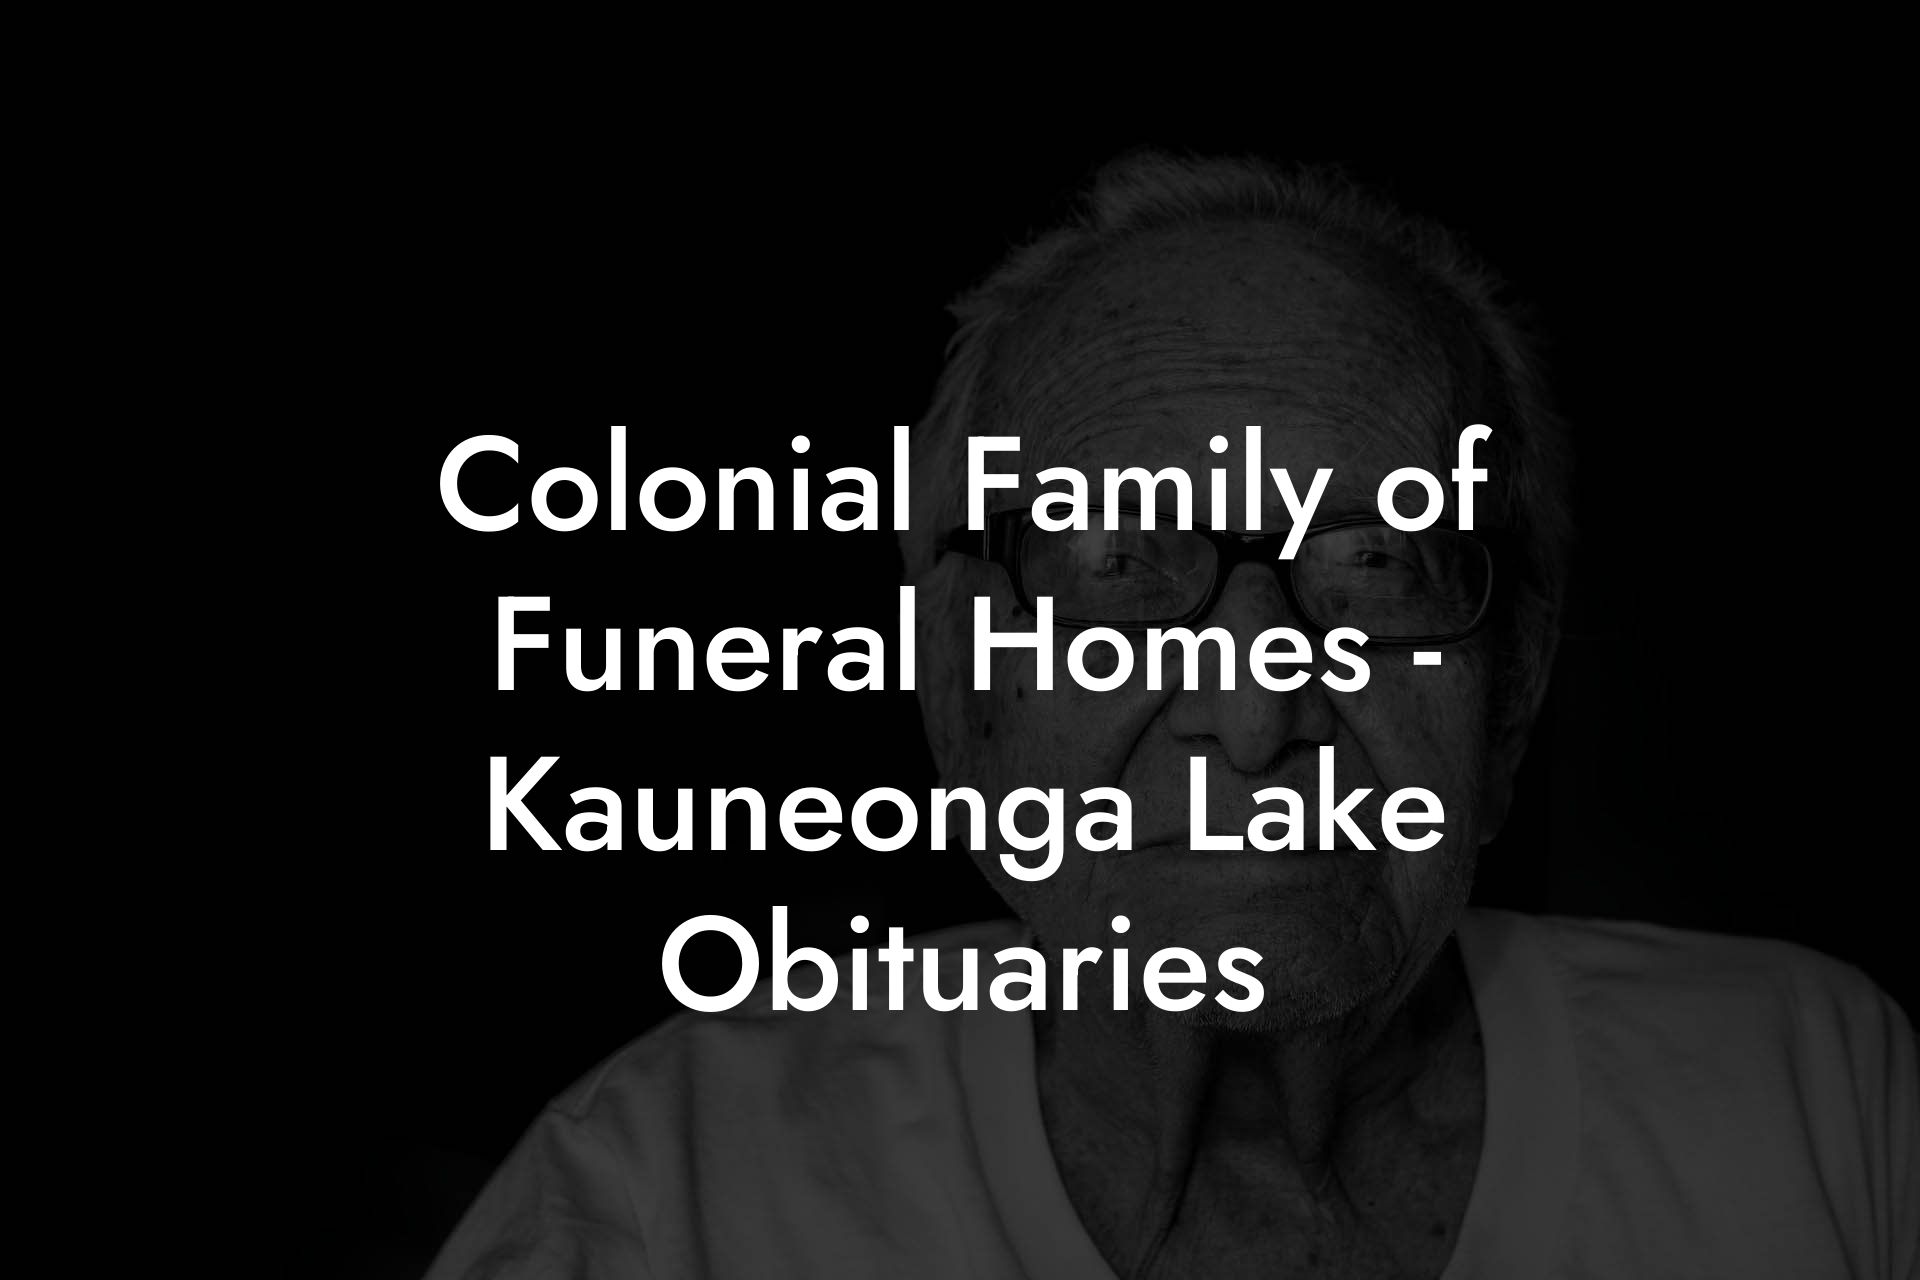 Colonial Family of Funeral Homes - Kauneonga Lake Obituaries